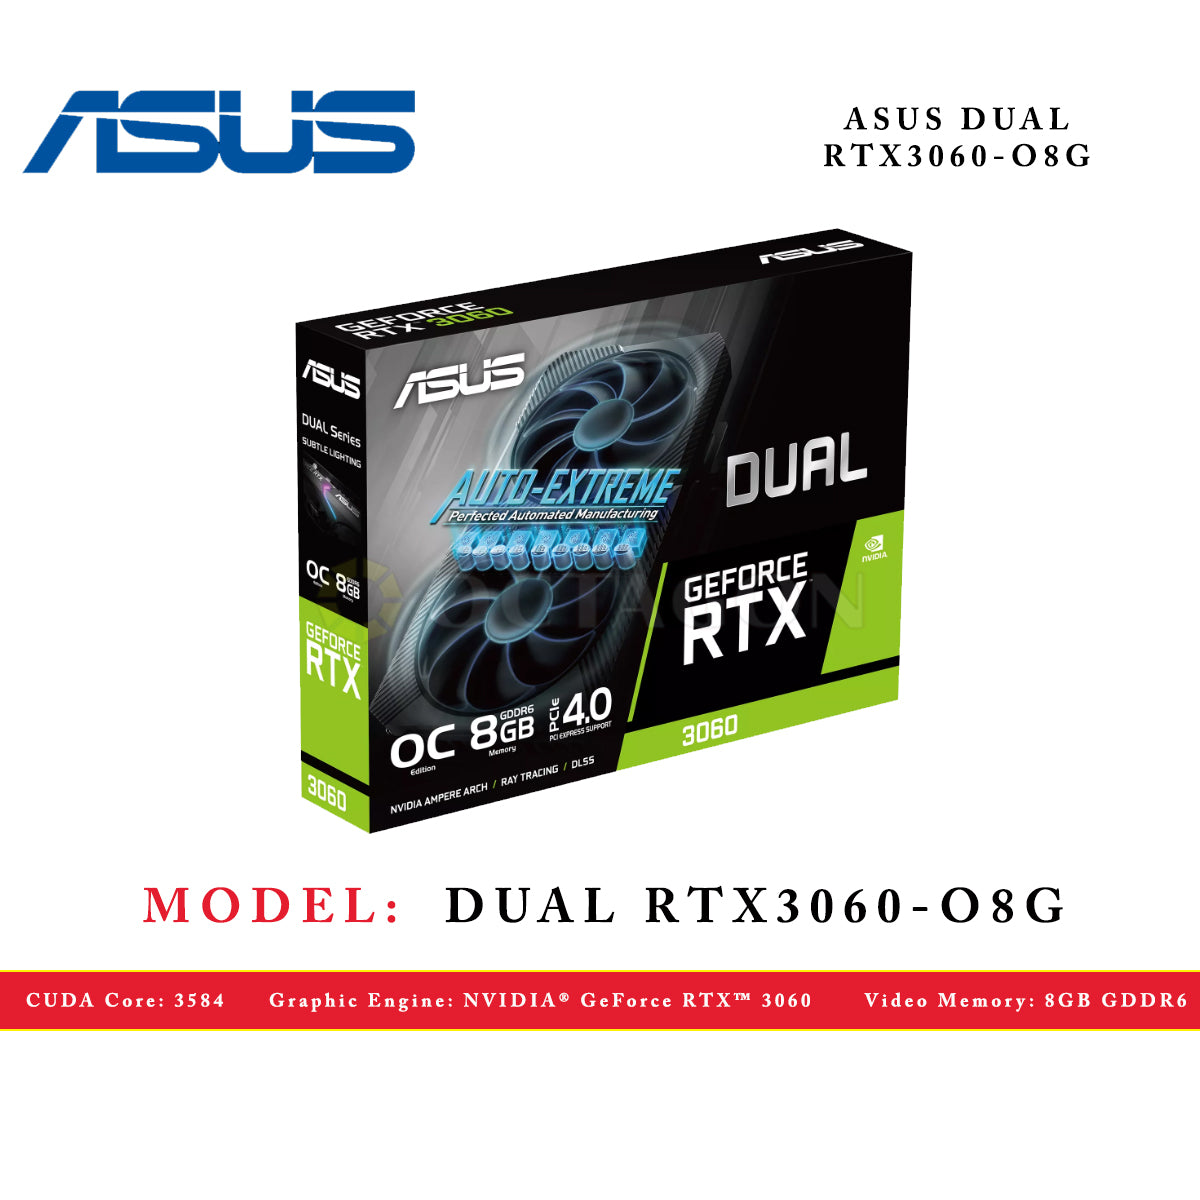 ASUS DUAL RTX3060-O8G